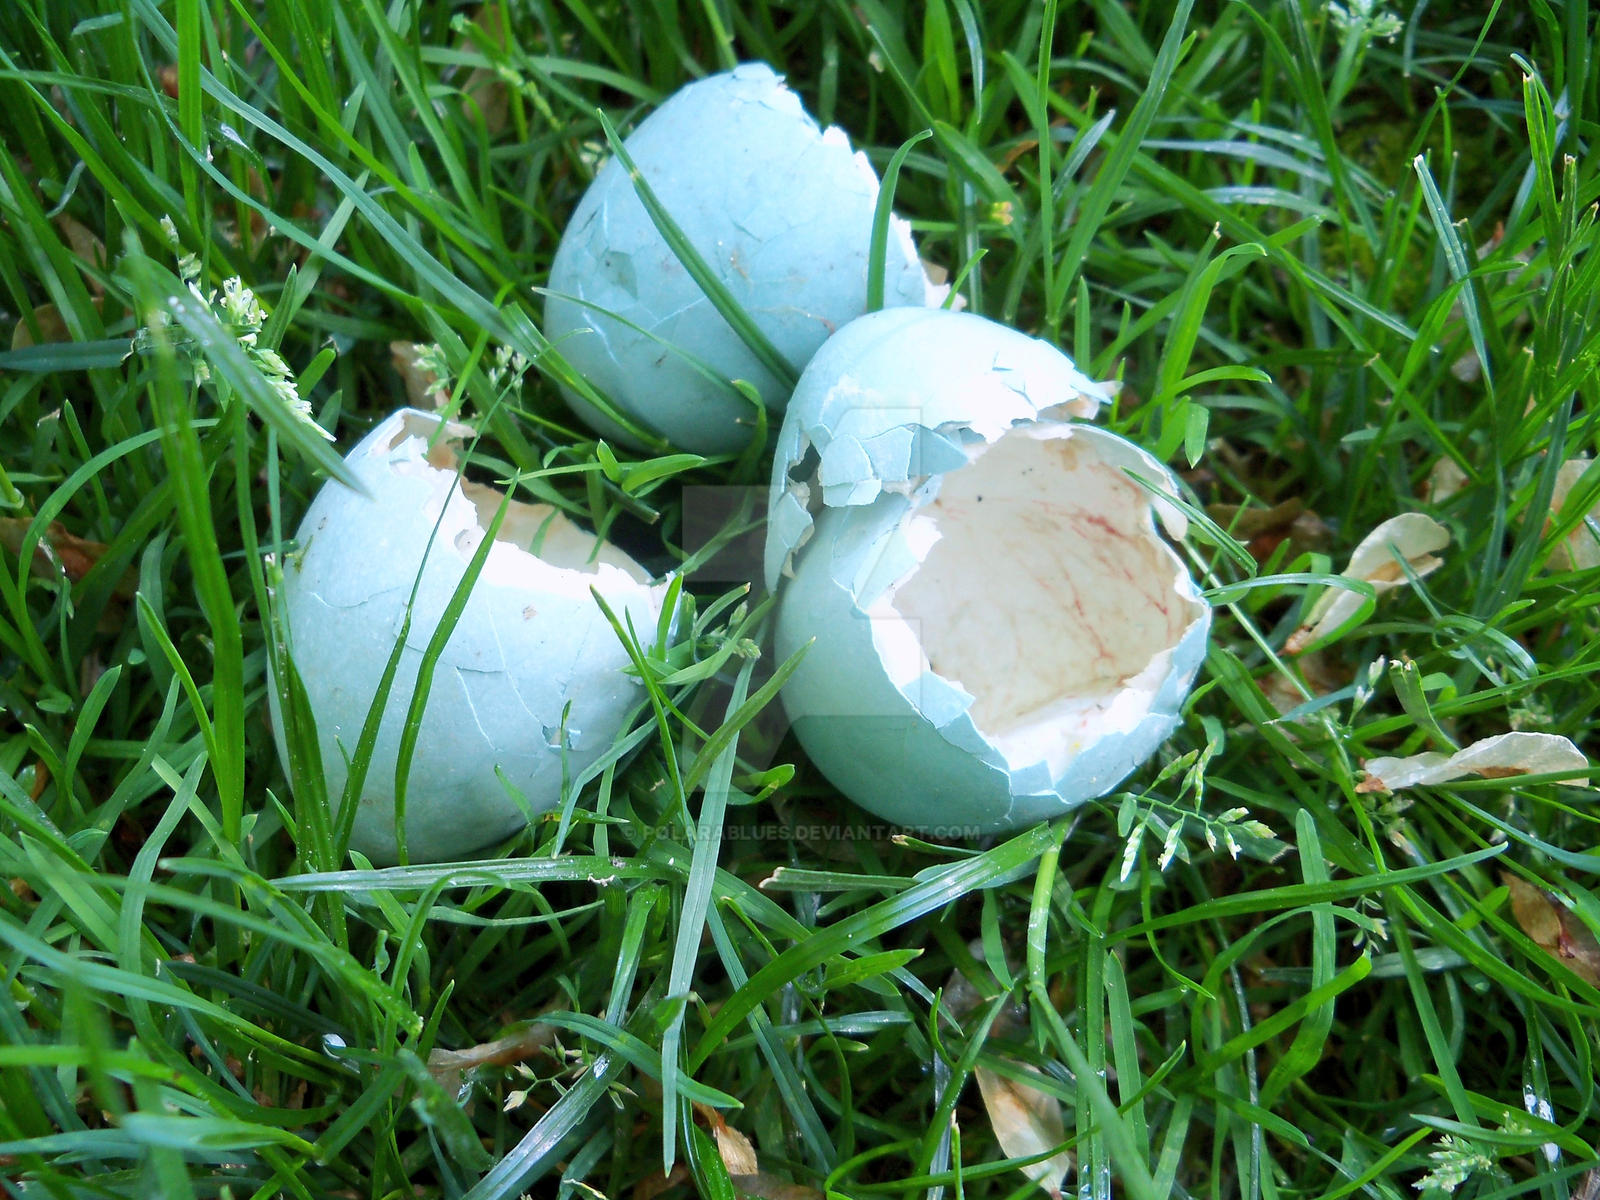 1: The Pterodactyl's Egg – ENGLISH